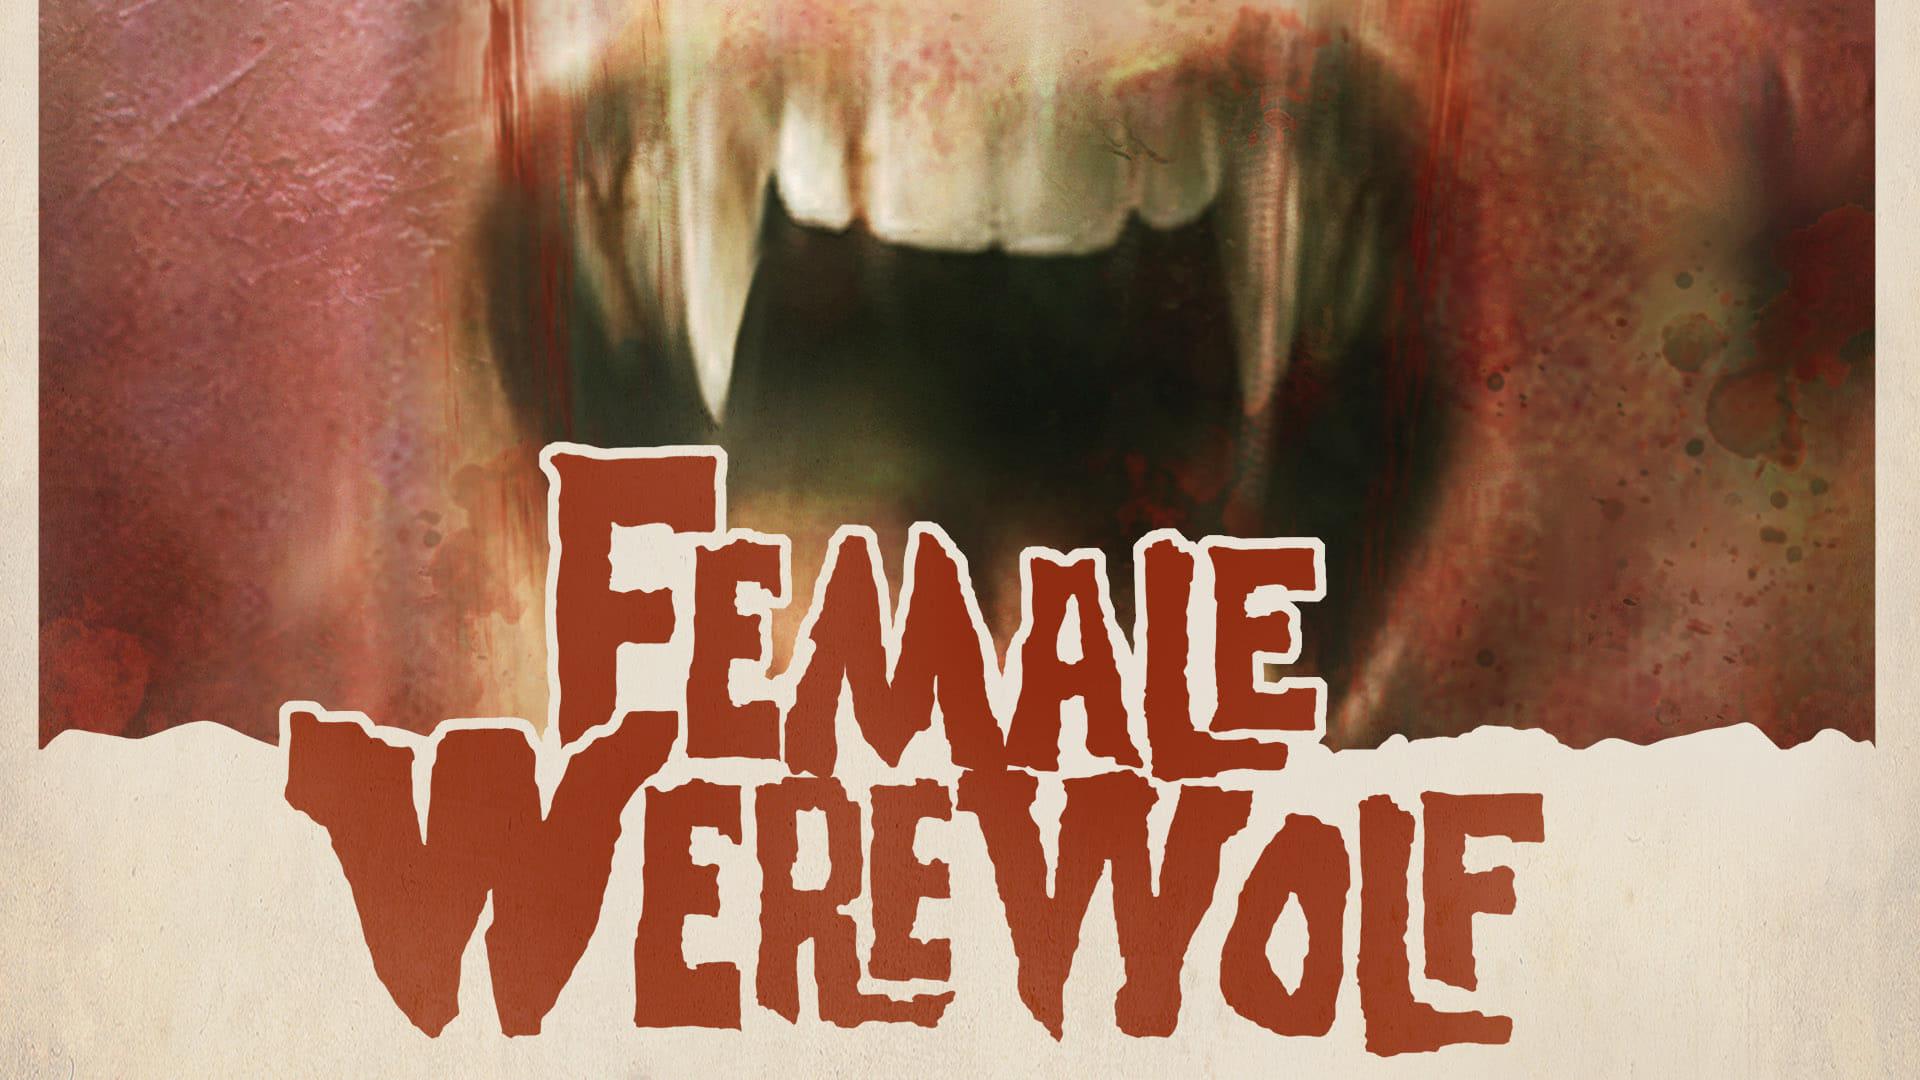 Female Werewolf backdrop